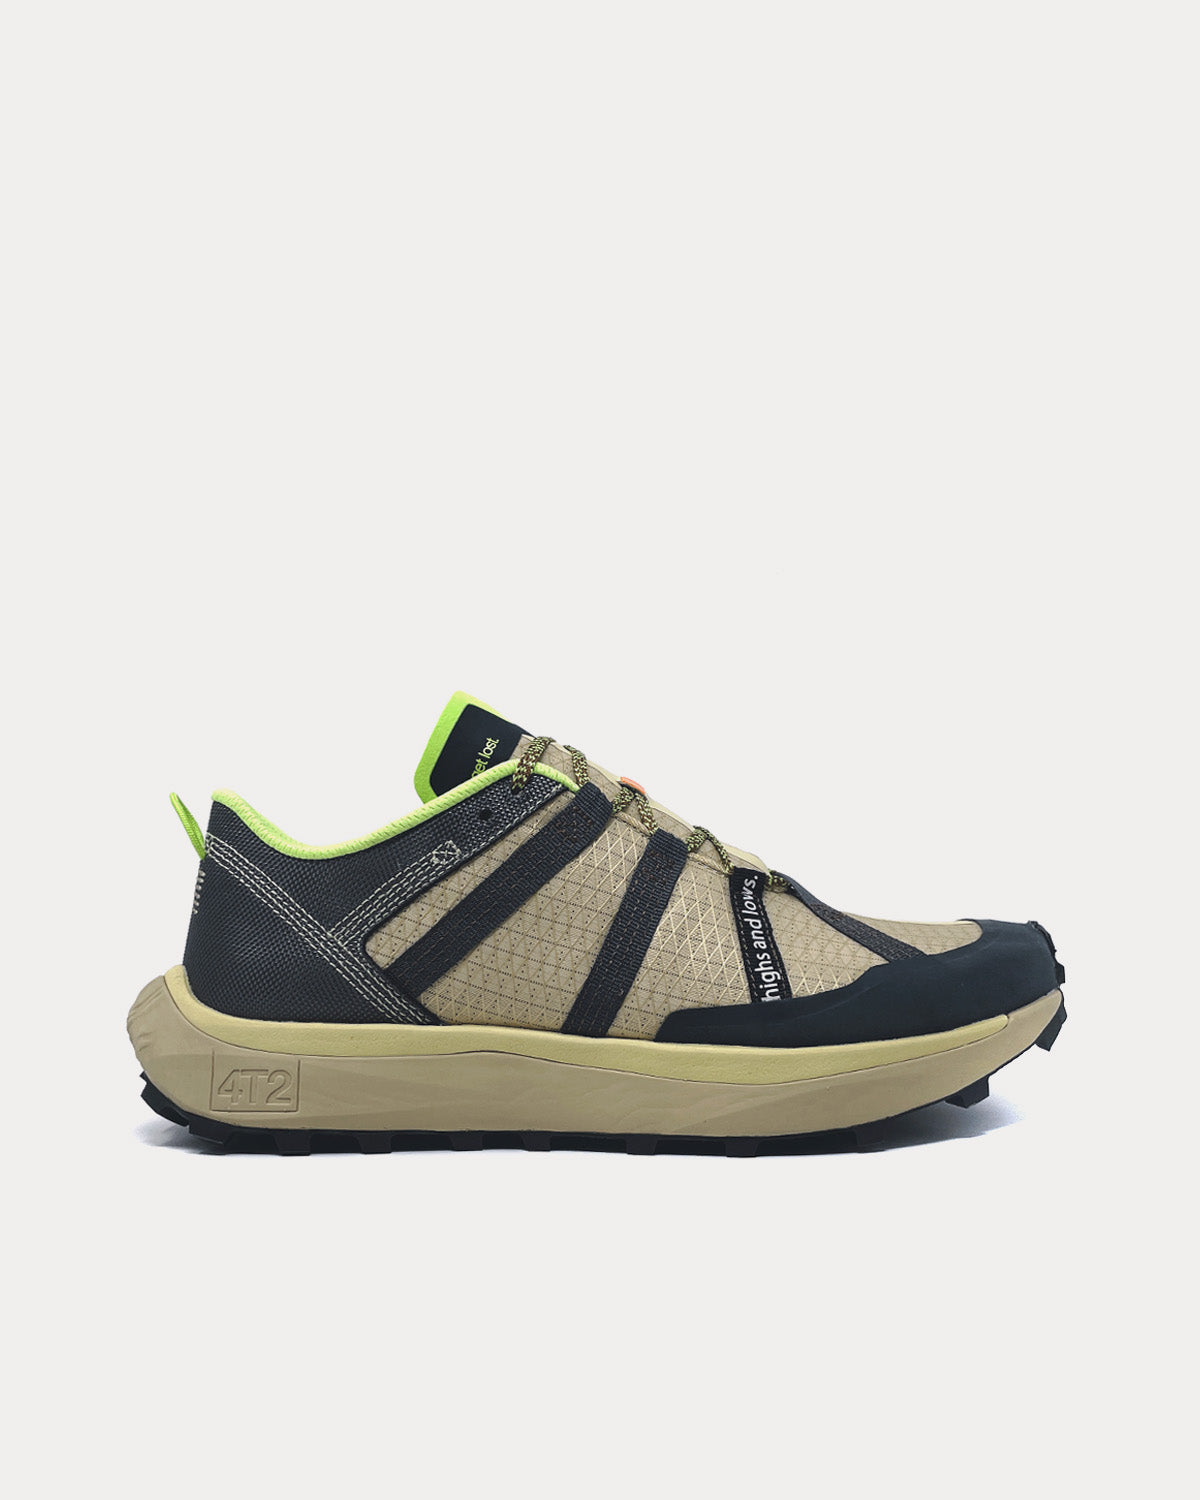 4T2 - Get Lost Black / Khaki / Green Running Shoes